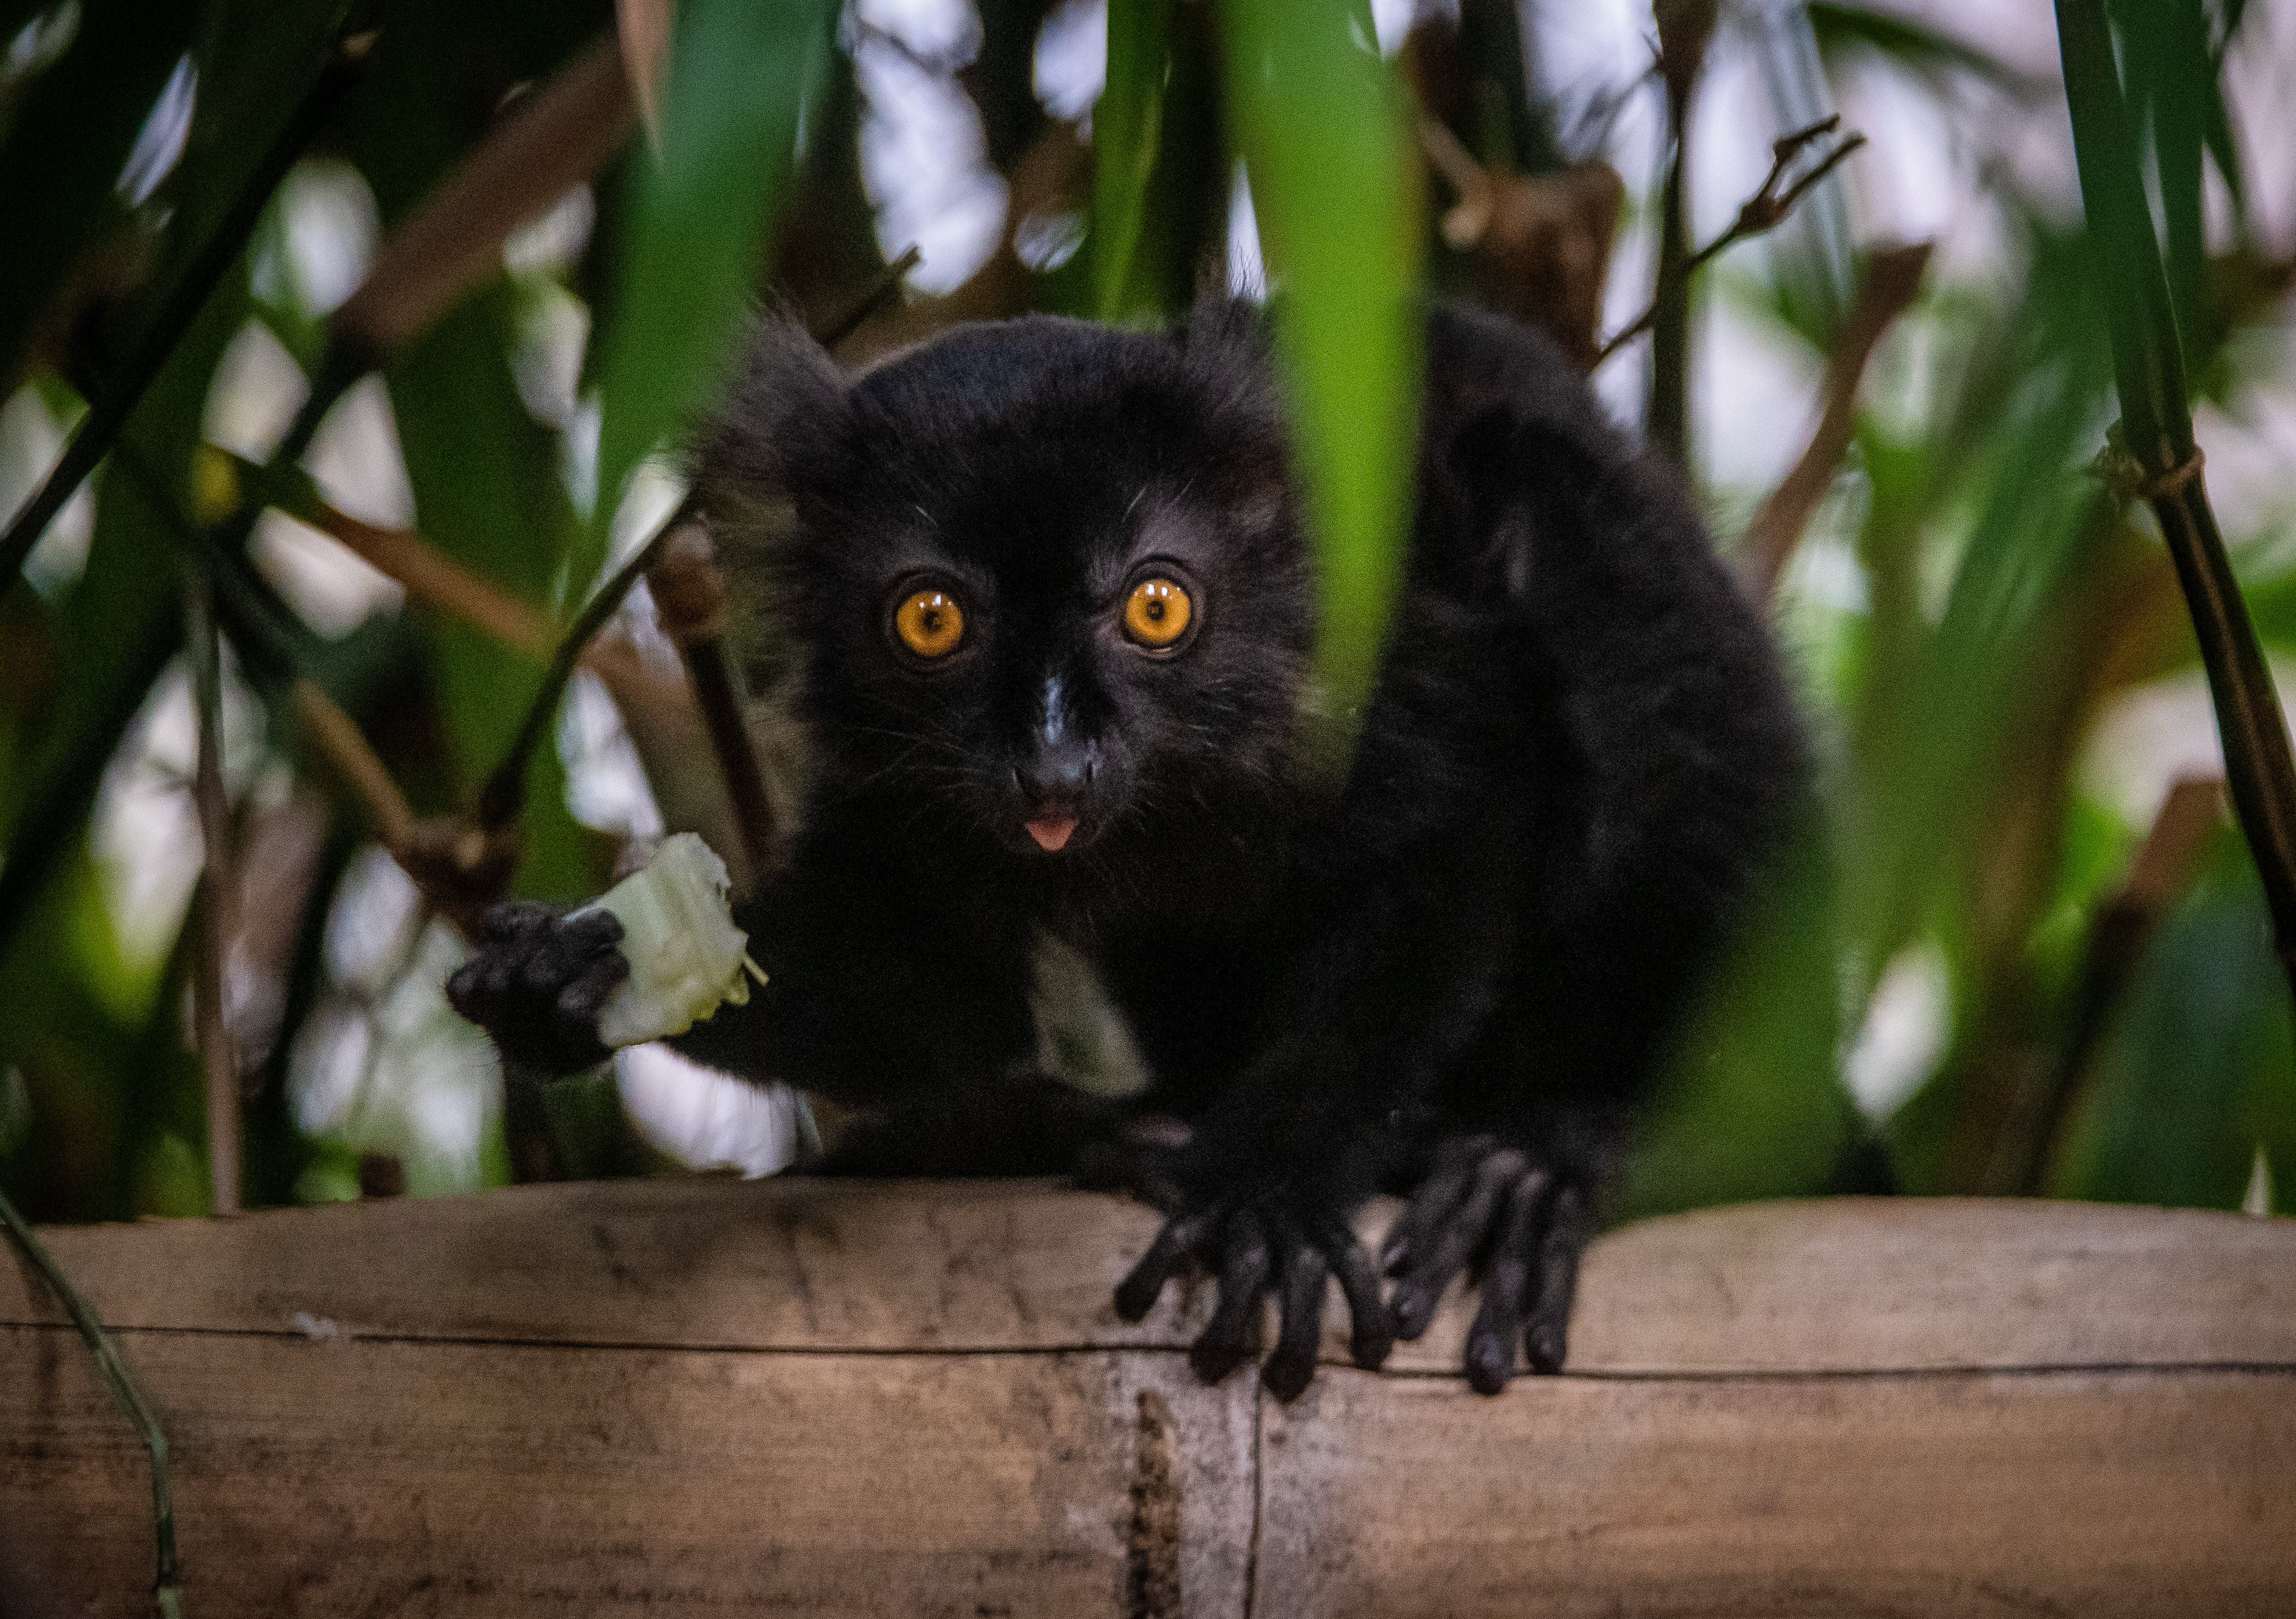 A baby black lemur born at Chester Zoo